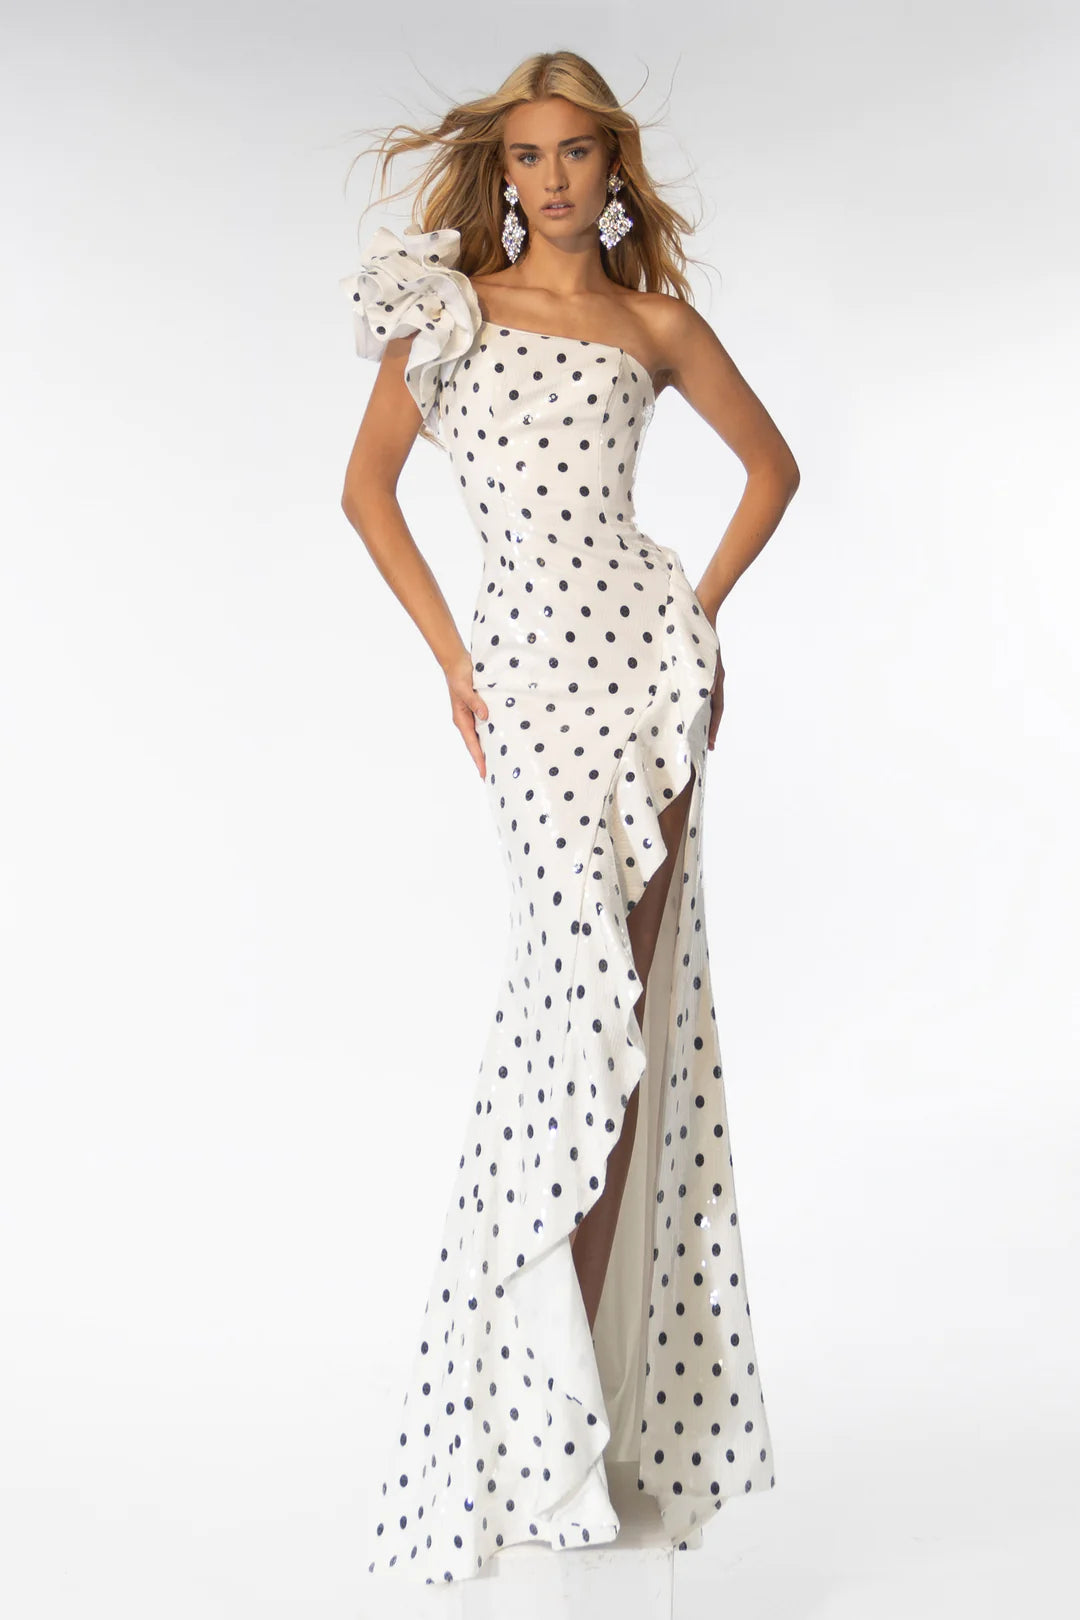 Ava Presley 39264 Sequin Polka Dot Fitted One Shoulder Long Dress Prom